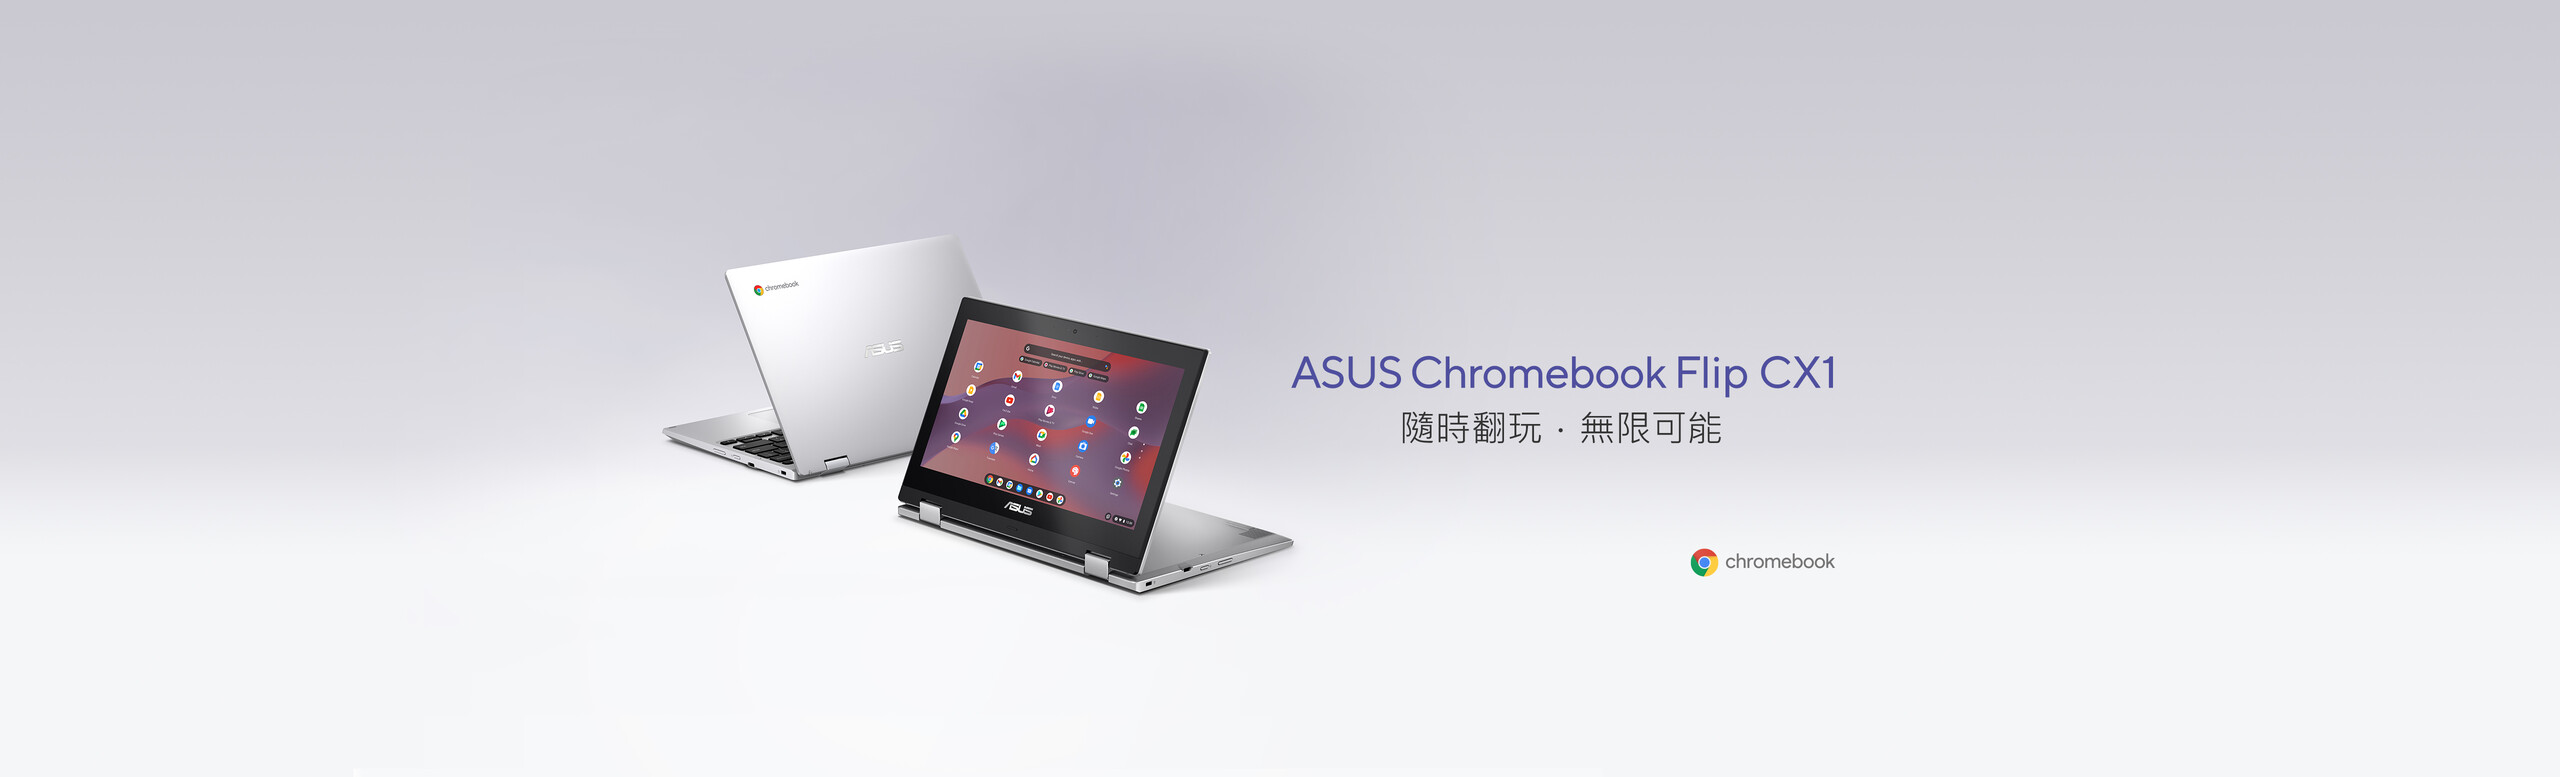 Chromebook CX1102